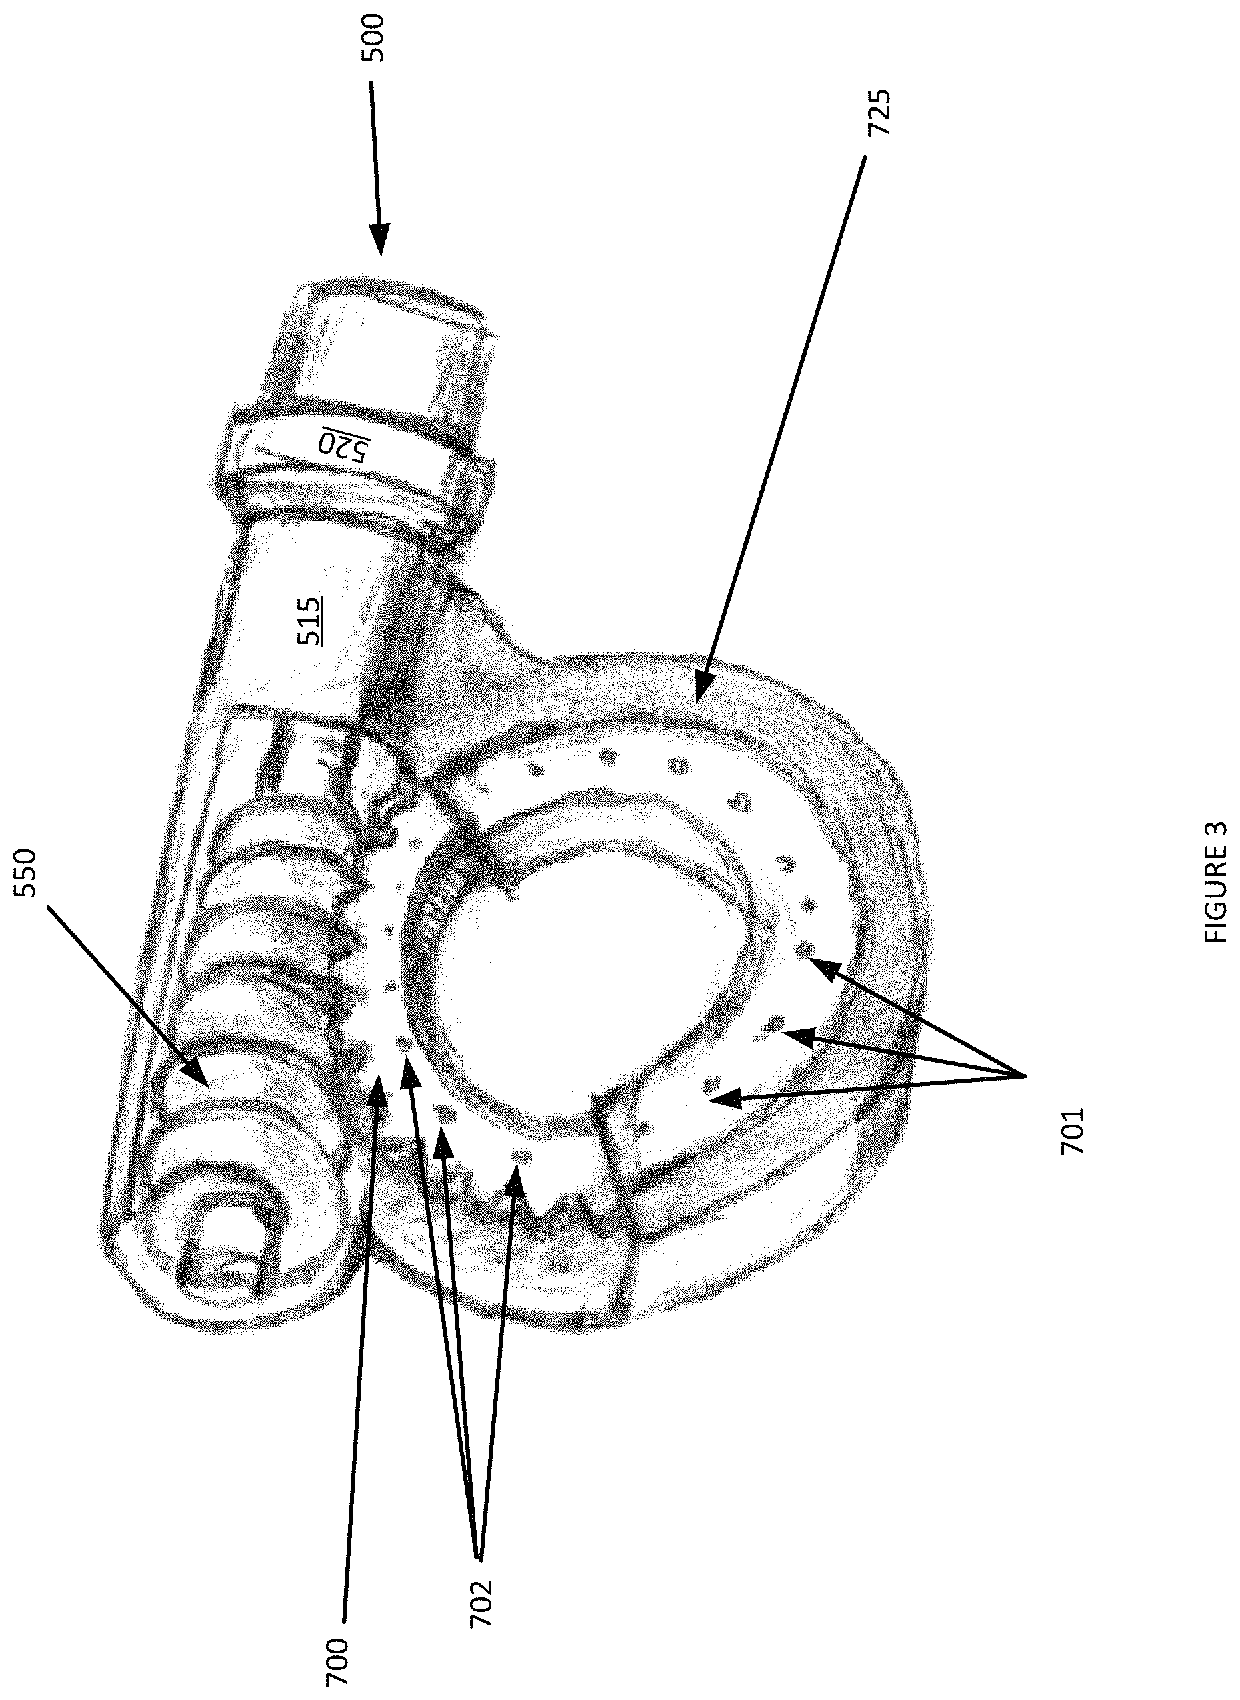 System for a hydraulic rotator